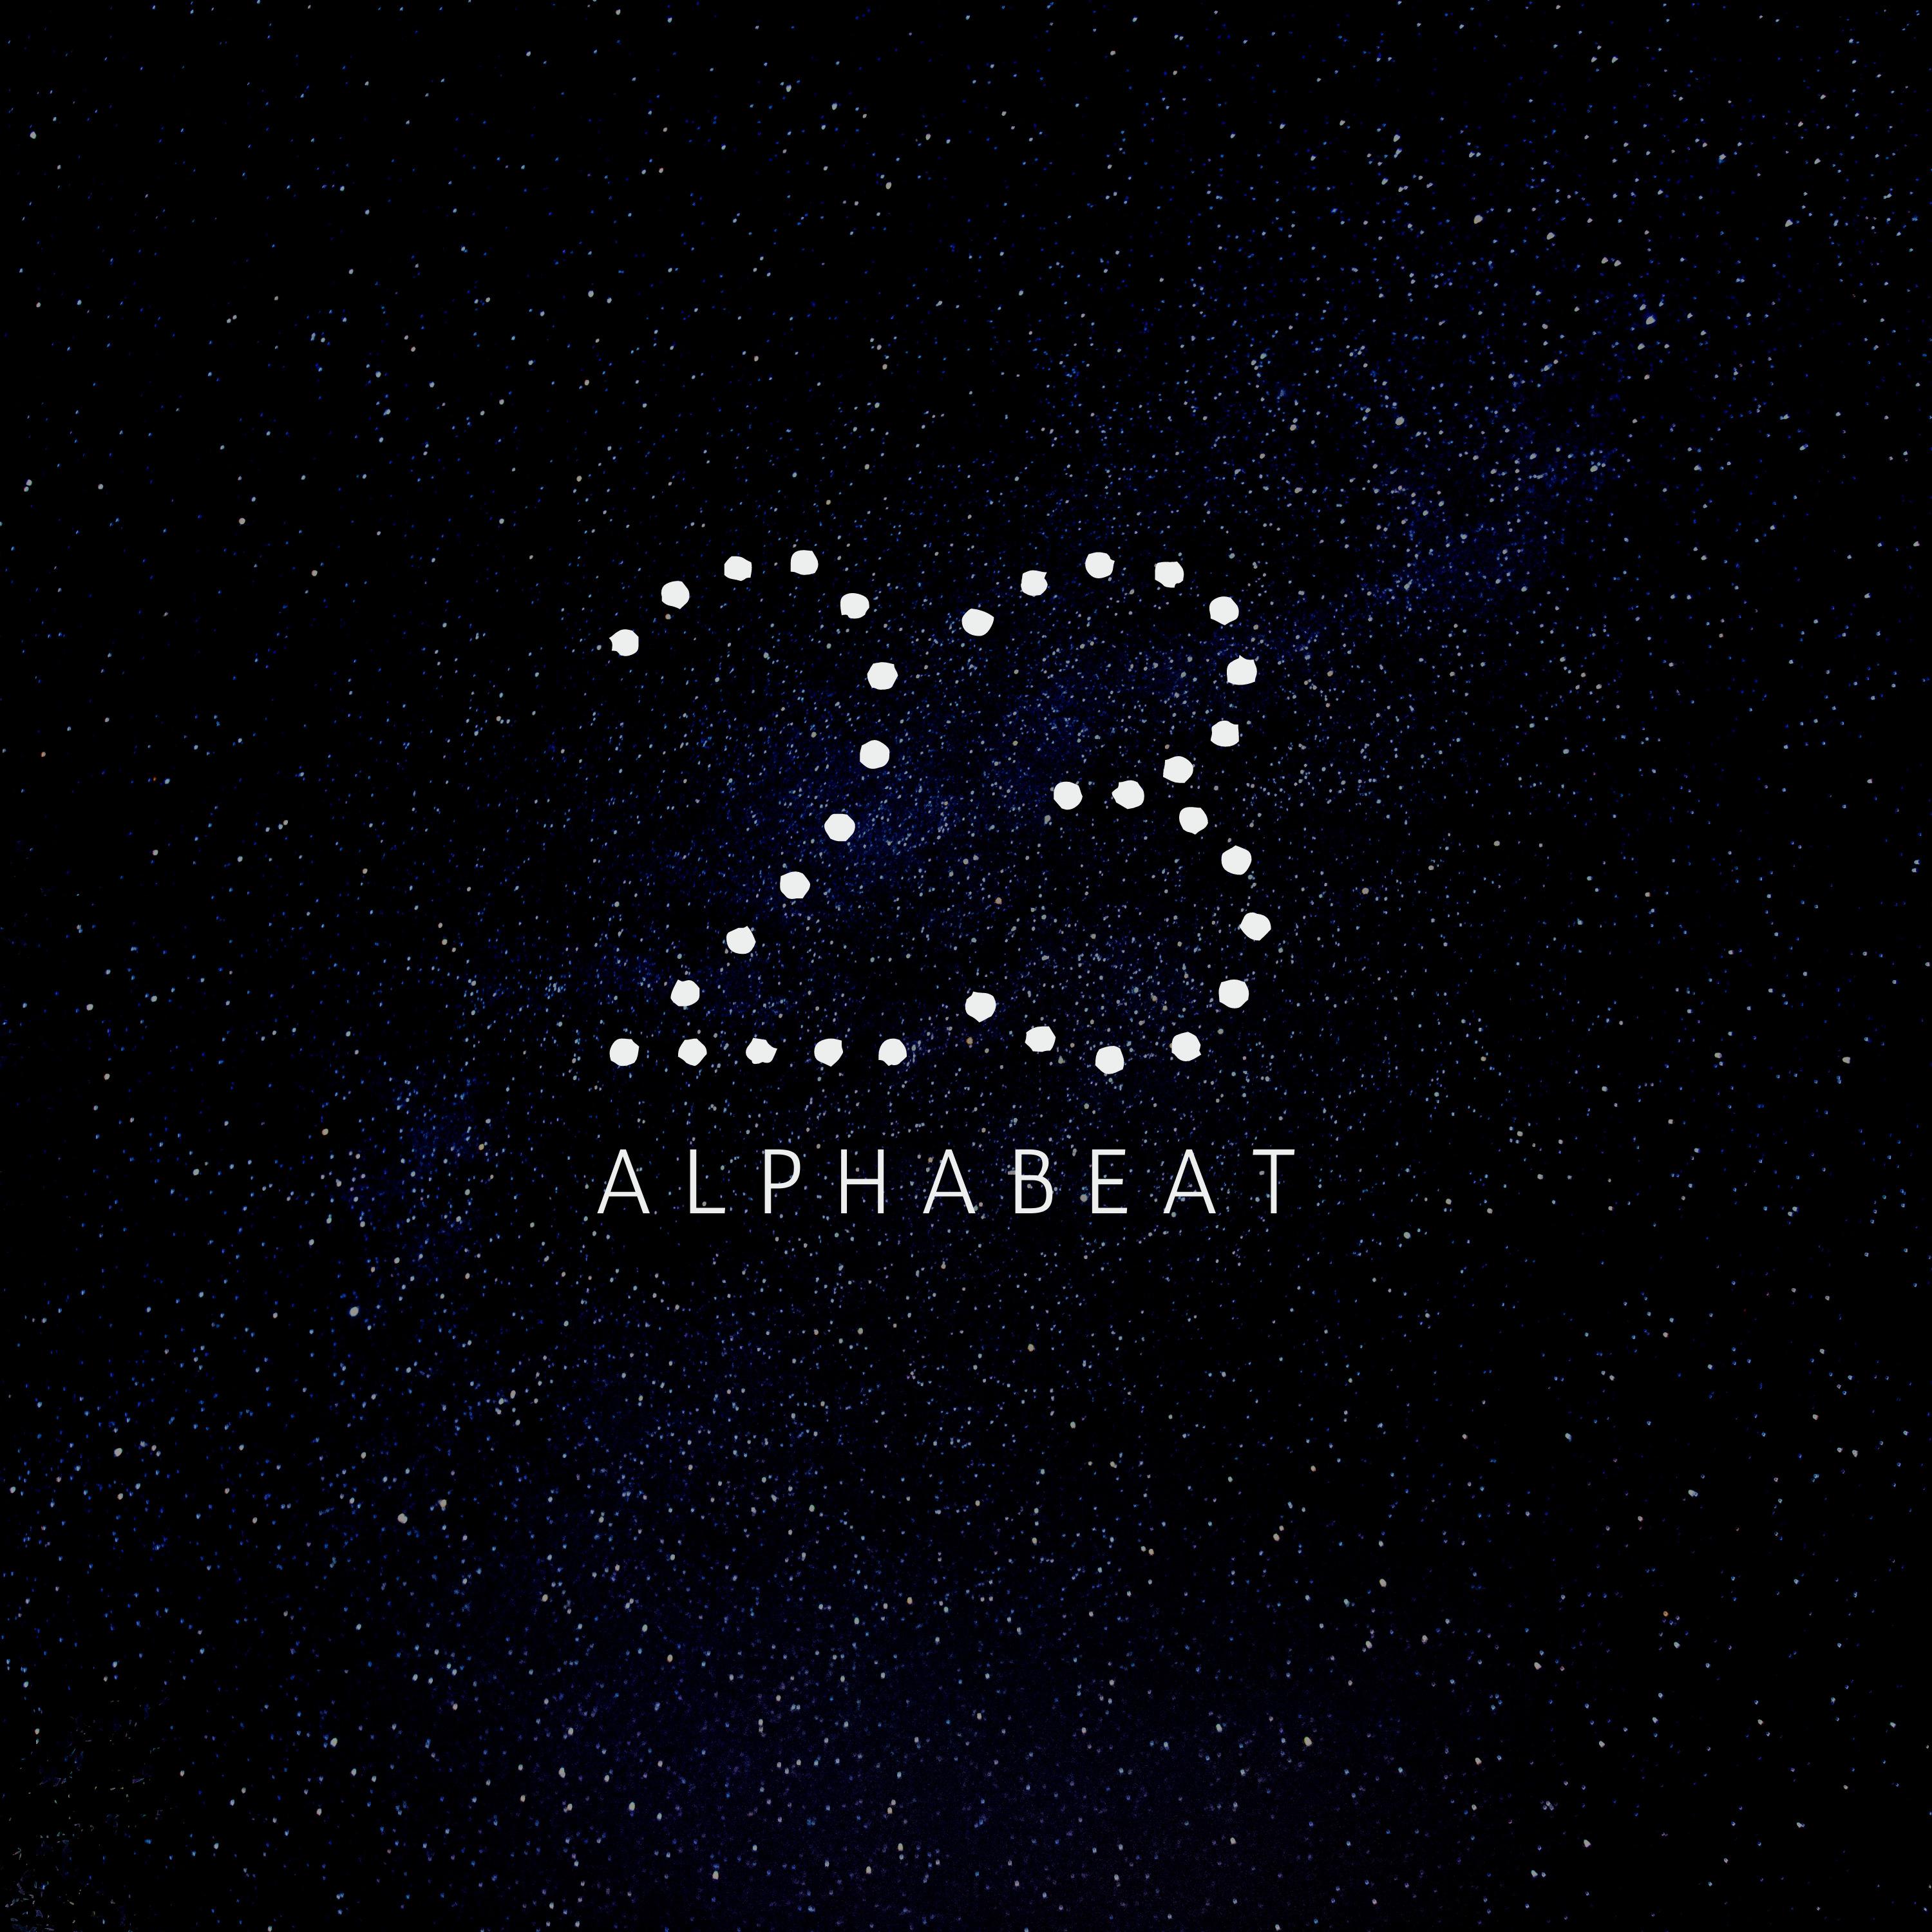 Alphabeat - Algebra